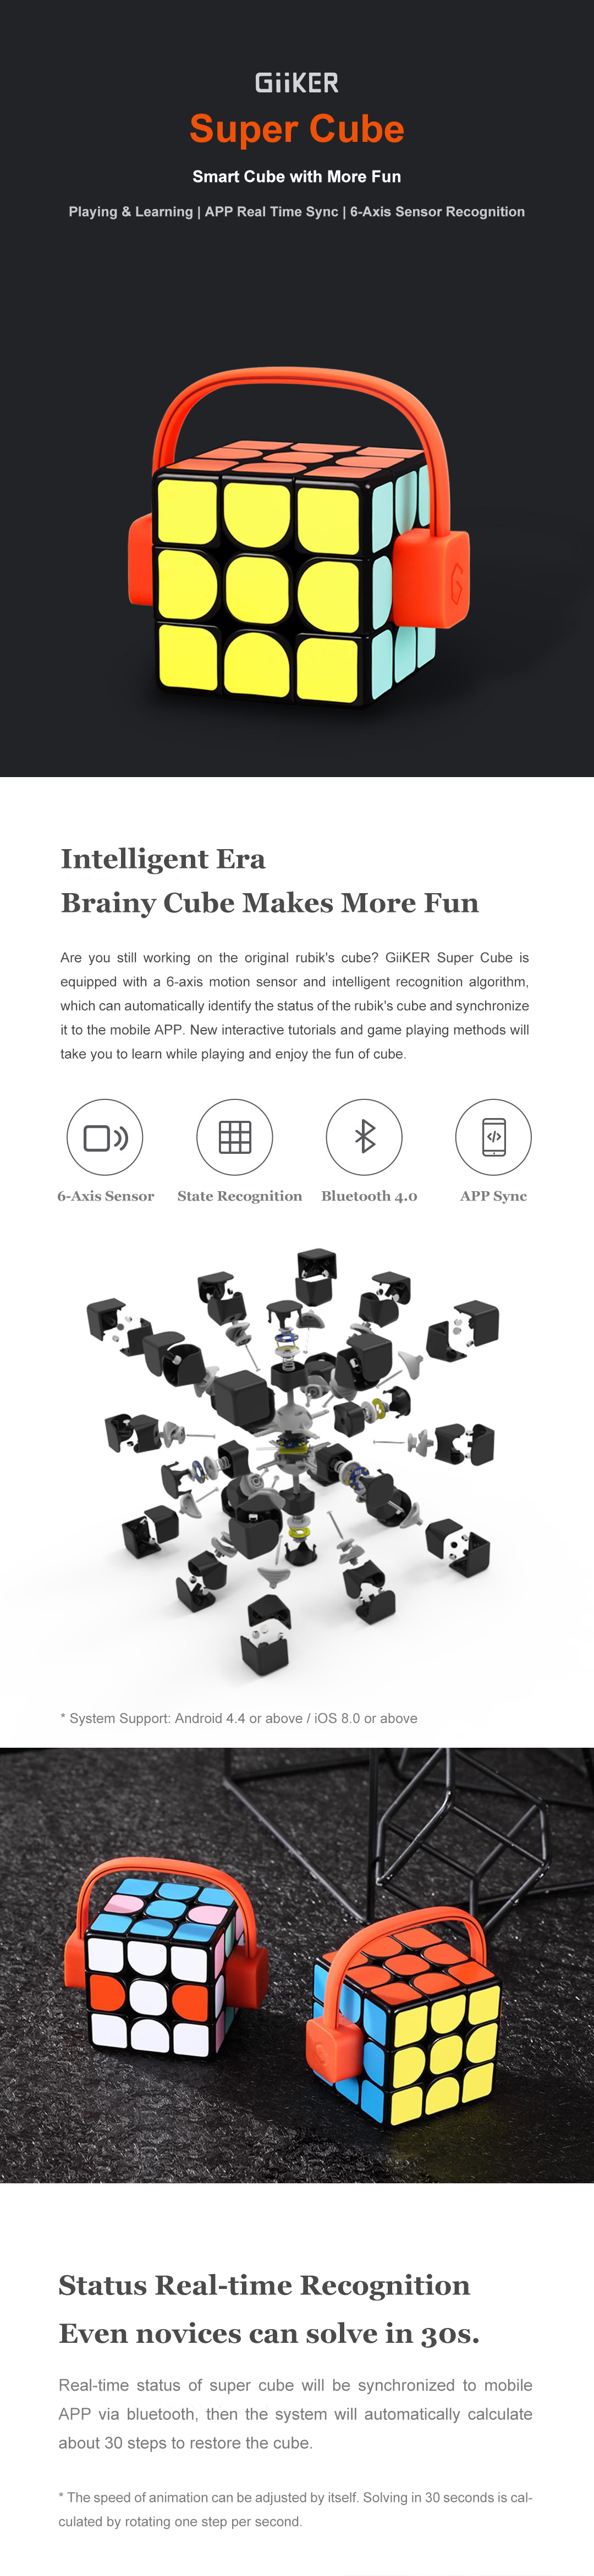 xiaomi giiker supercube i3 smart bluetooth rubiks cube